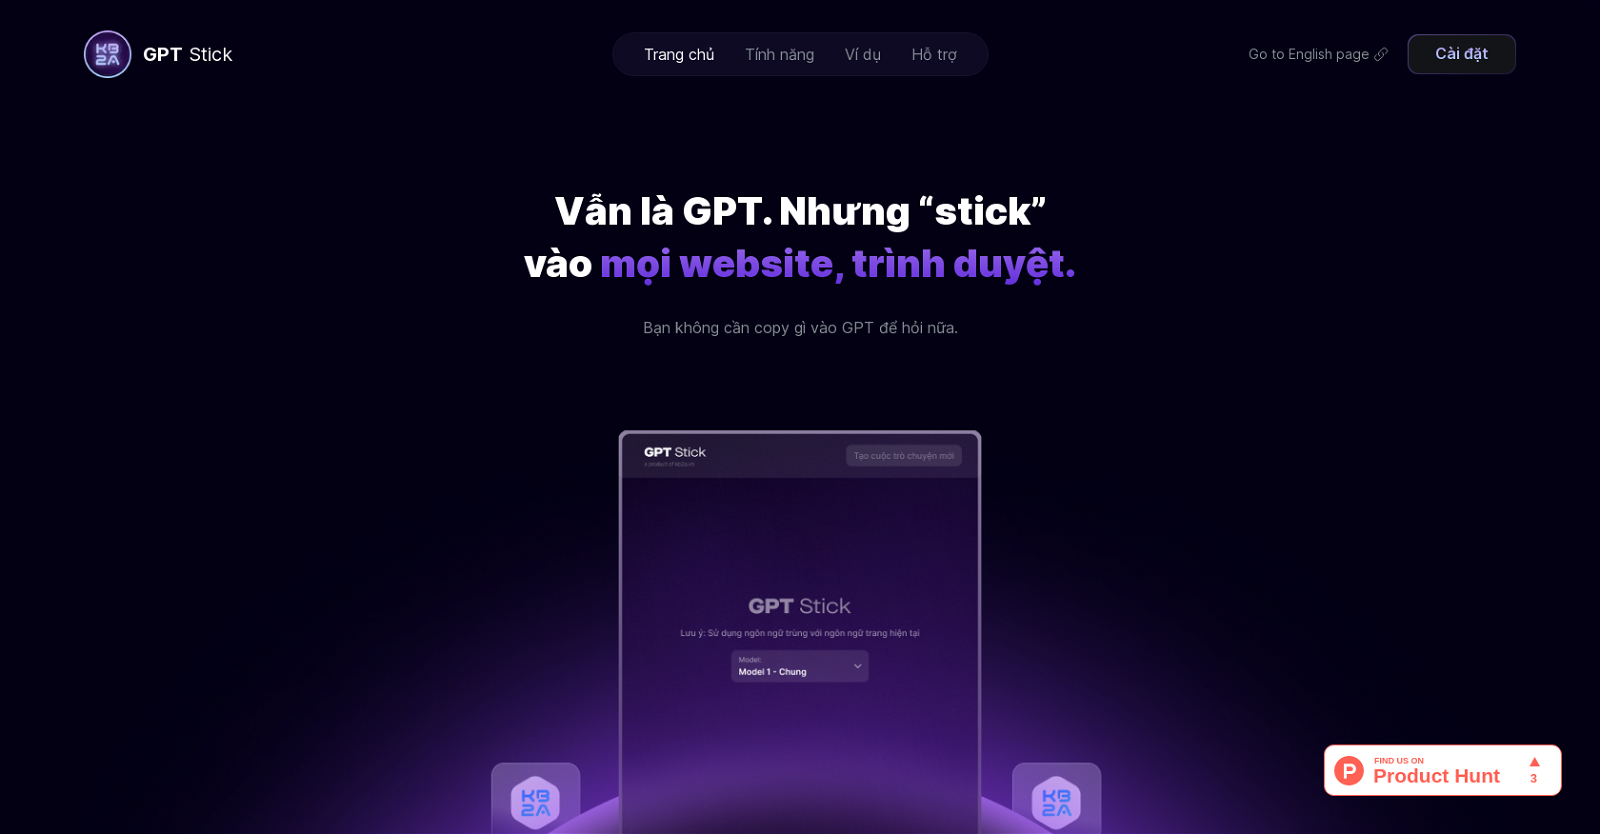 GPT Stick website